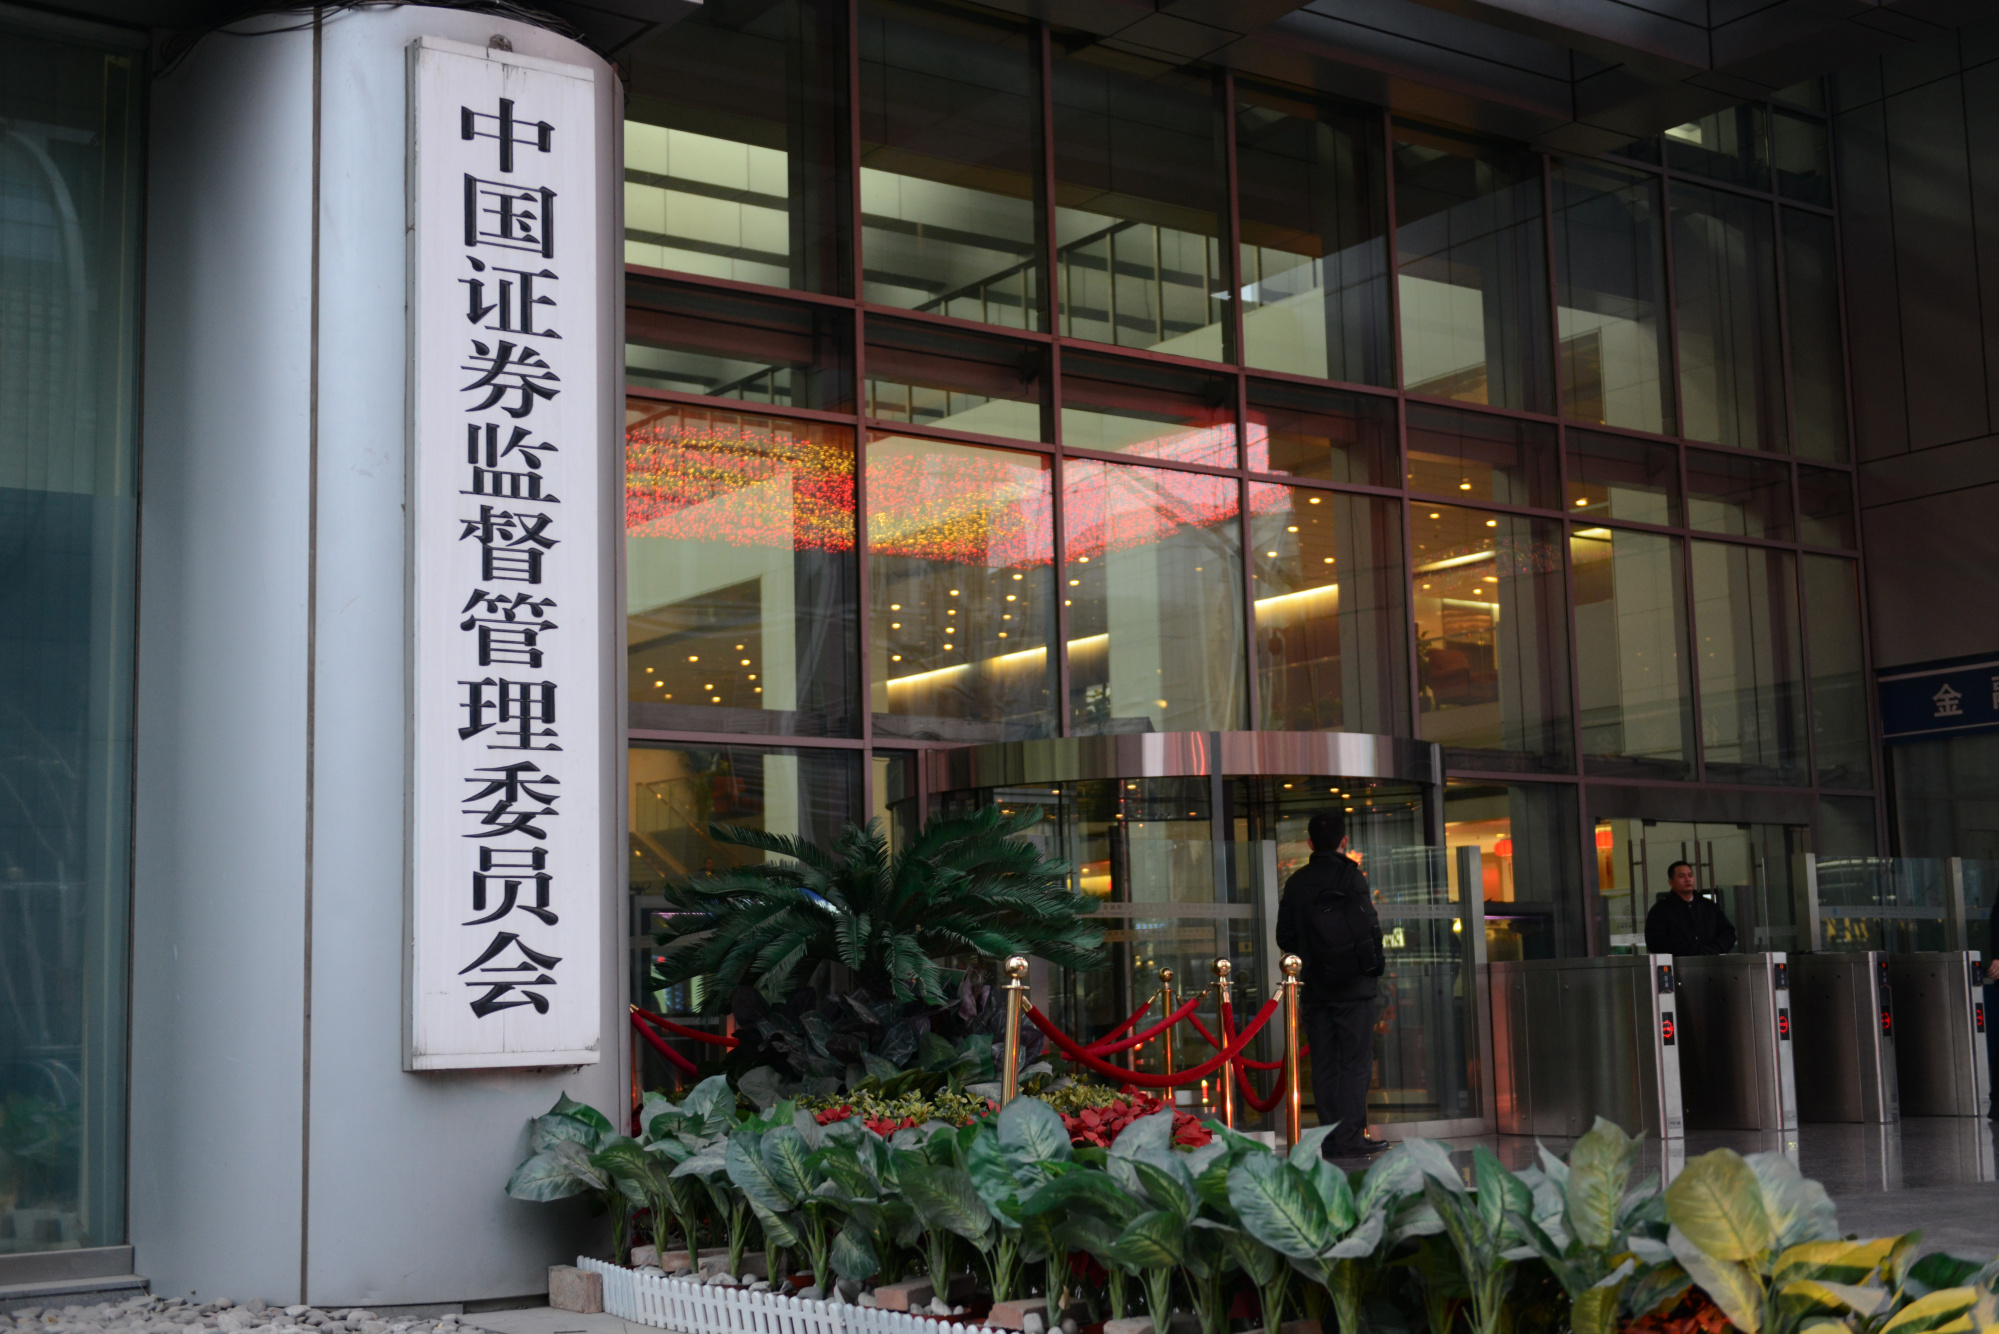 China Securities Regulatory Commission’s headquarters in Beijing.&nbsp;